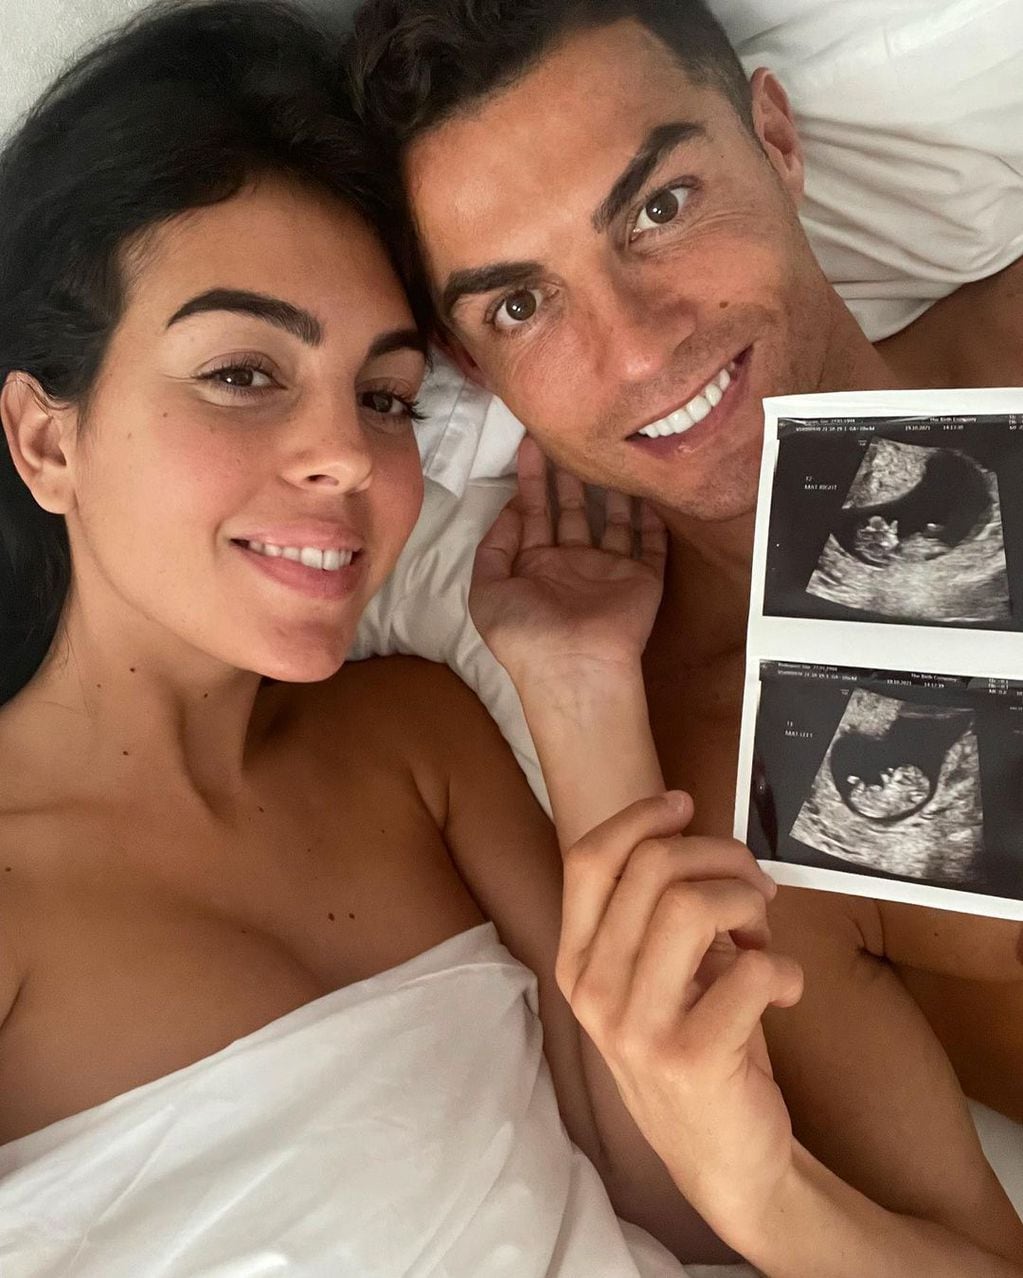 La foto con la que Cristiano Ronaldo anunció el embarazo de Georgina Rodríguez. (Foto: Instagram)